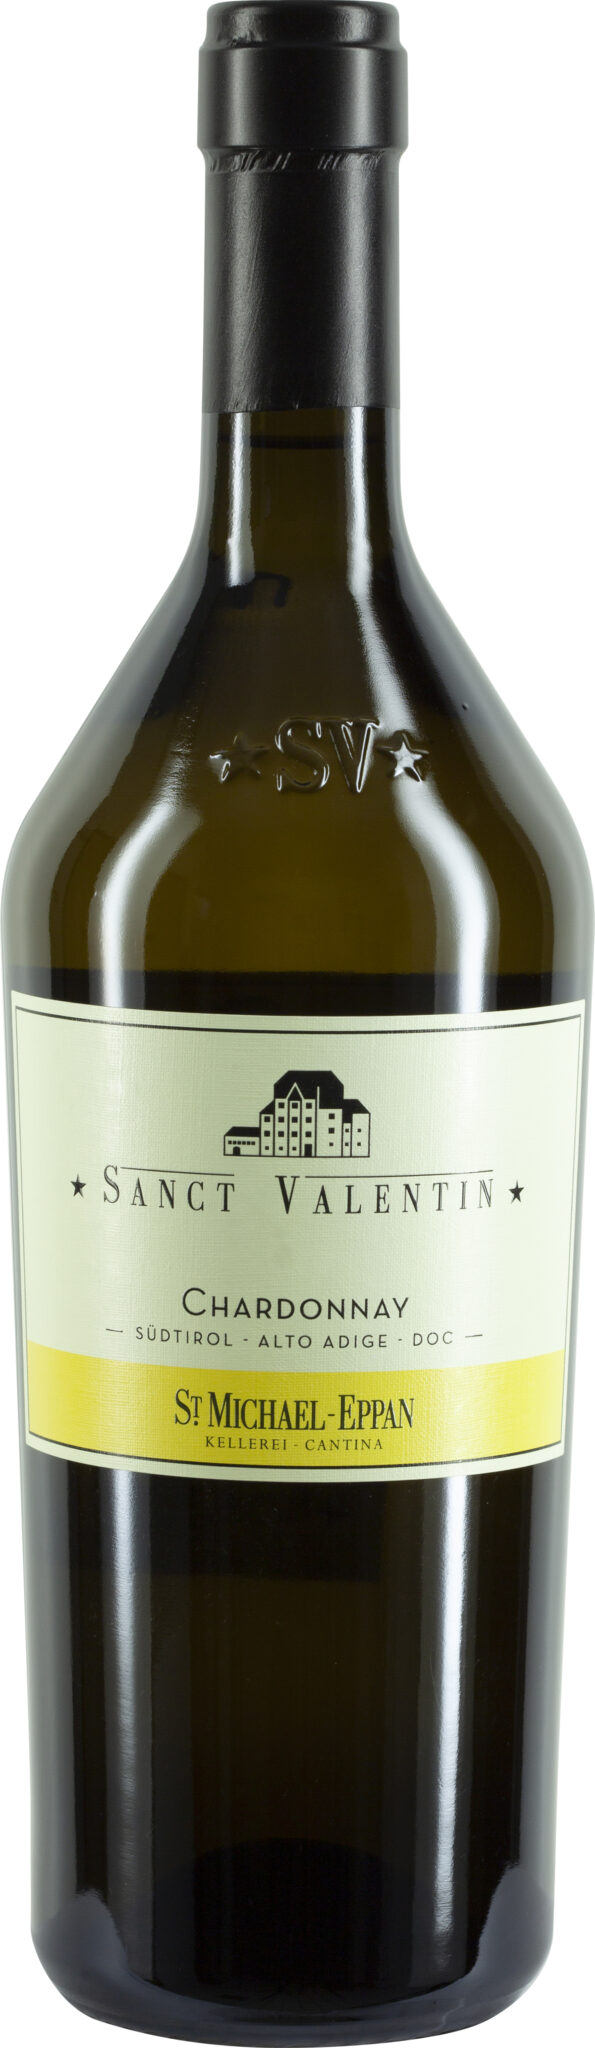 St. Michael-Eppan - Sanct Valentin, Chardonnay Alto Adige DOC